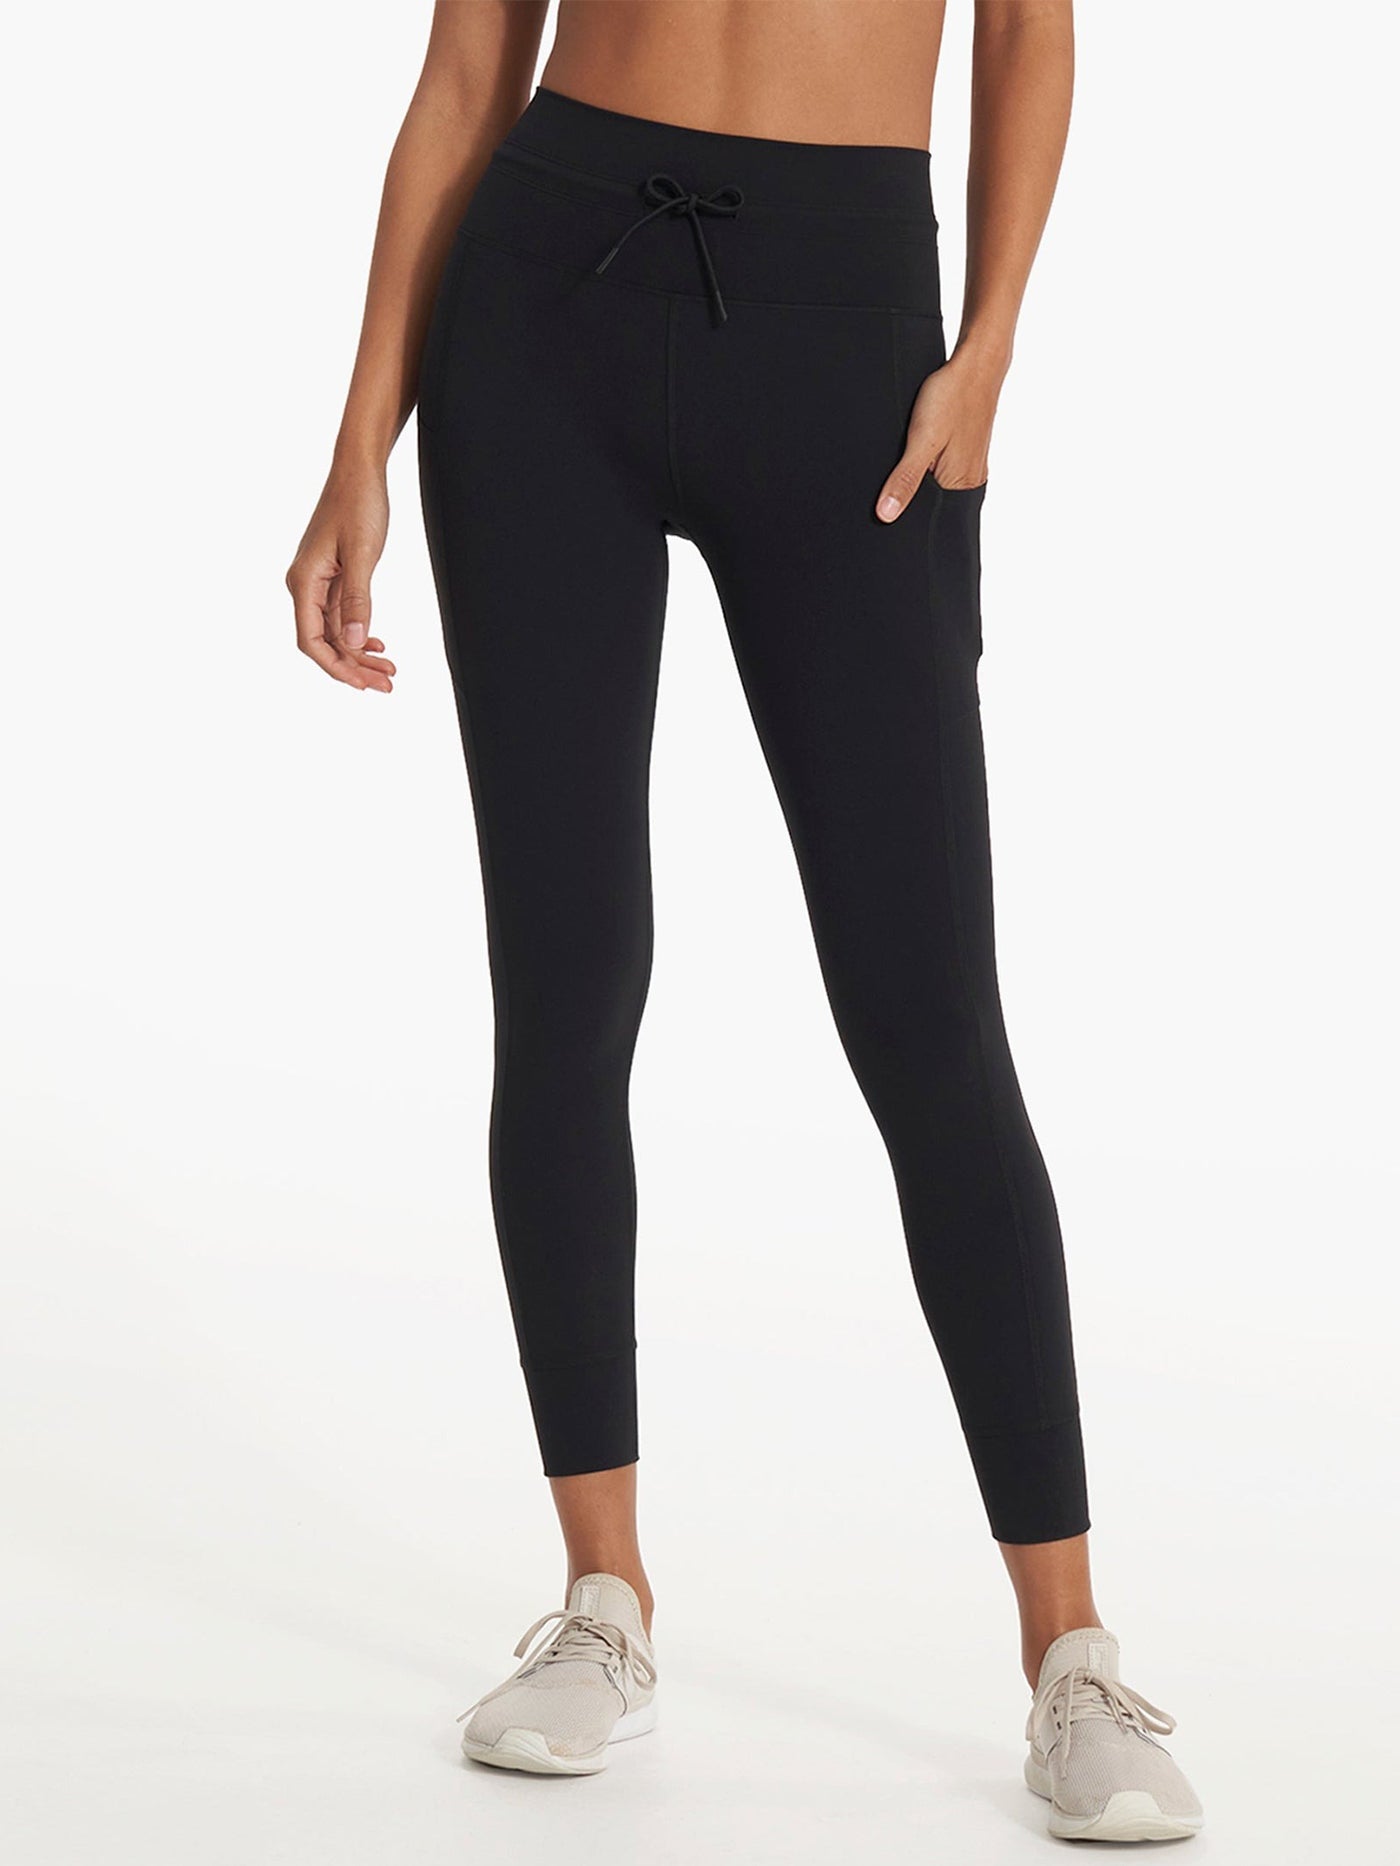 Beta Brand Size XL Long Black Dress Yoga Pants Crop Light Stretch High Rise  Tall